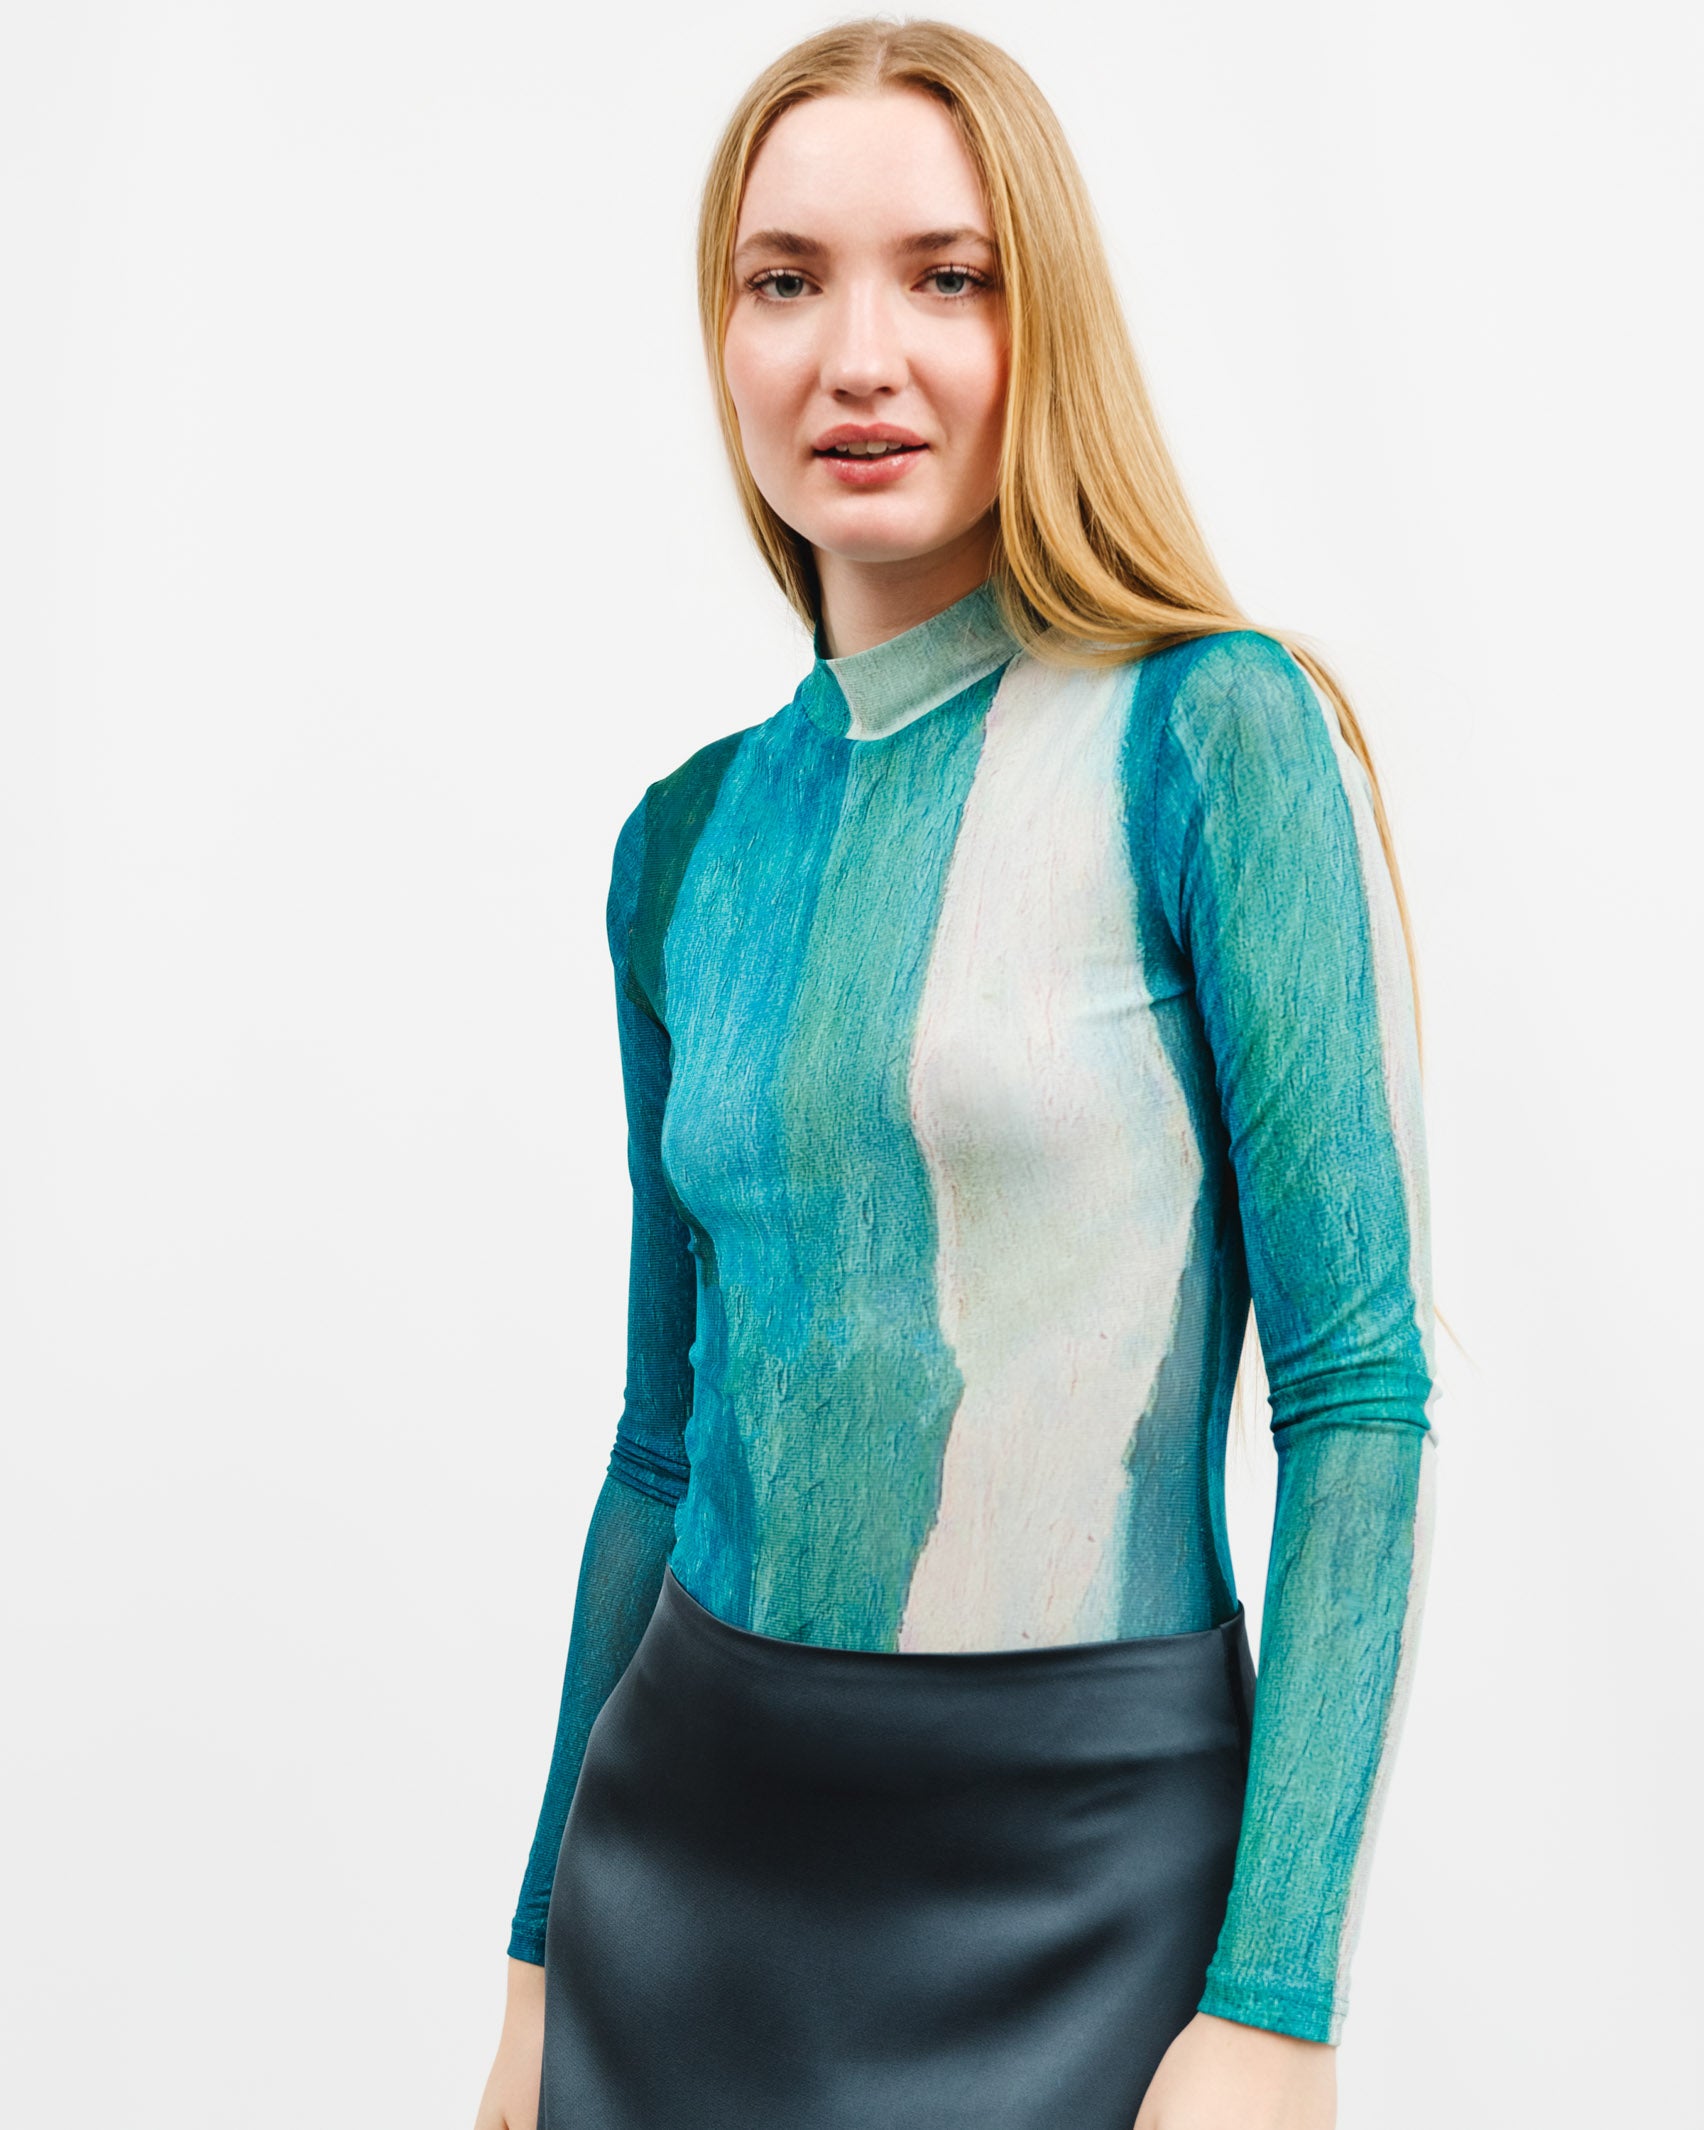 Langarm Body mit abstraktem Muster in Wasserfarben Optik - Broke + Schön